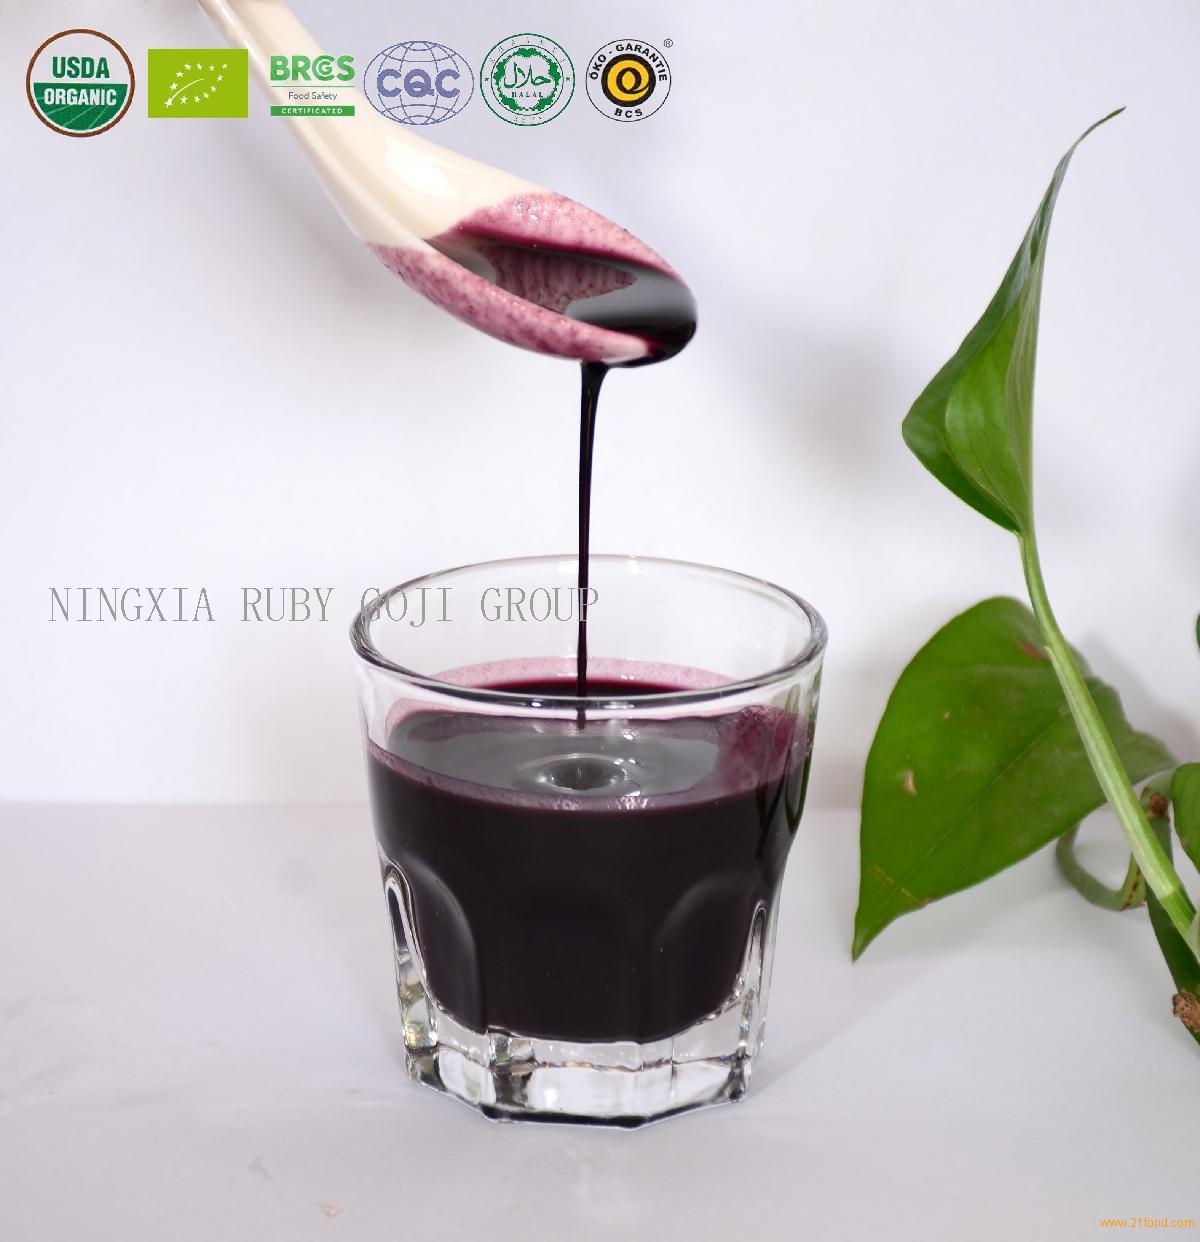 Functio-nal Black Goji juice